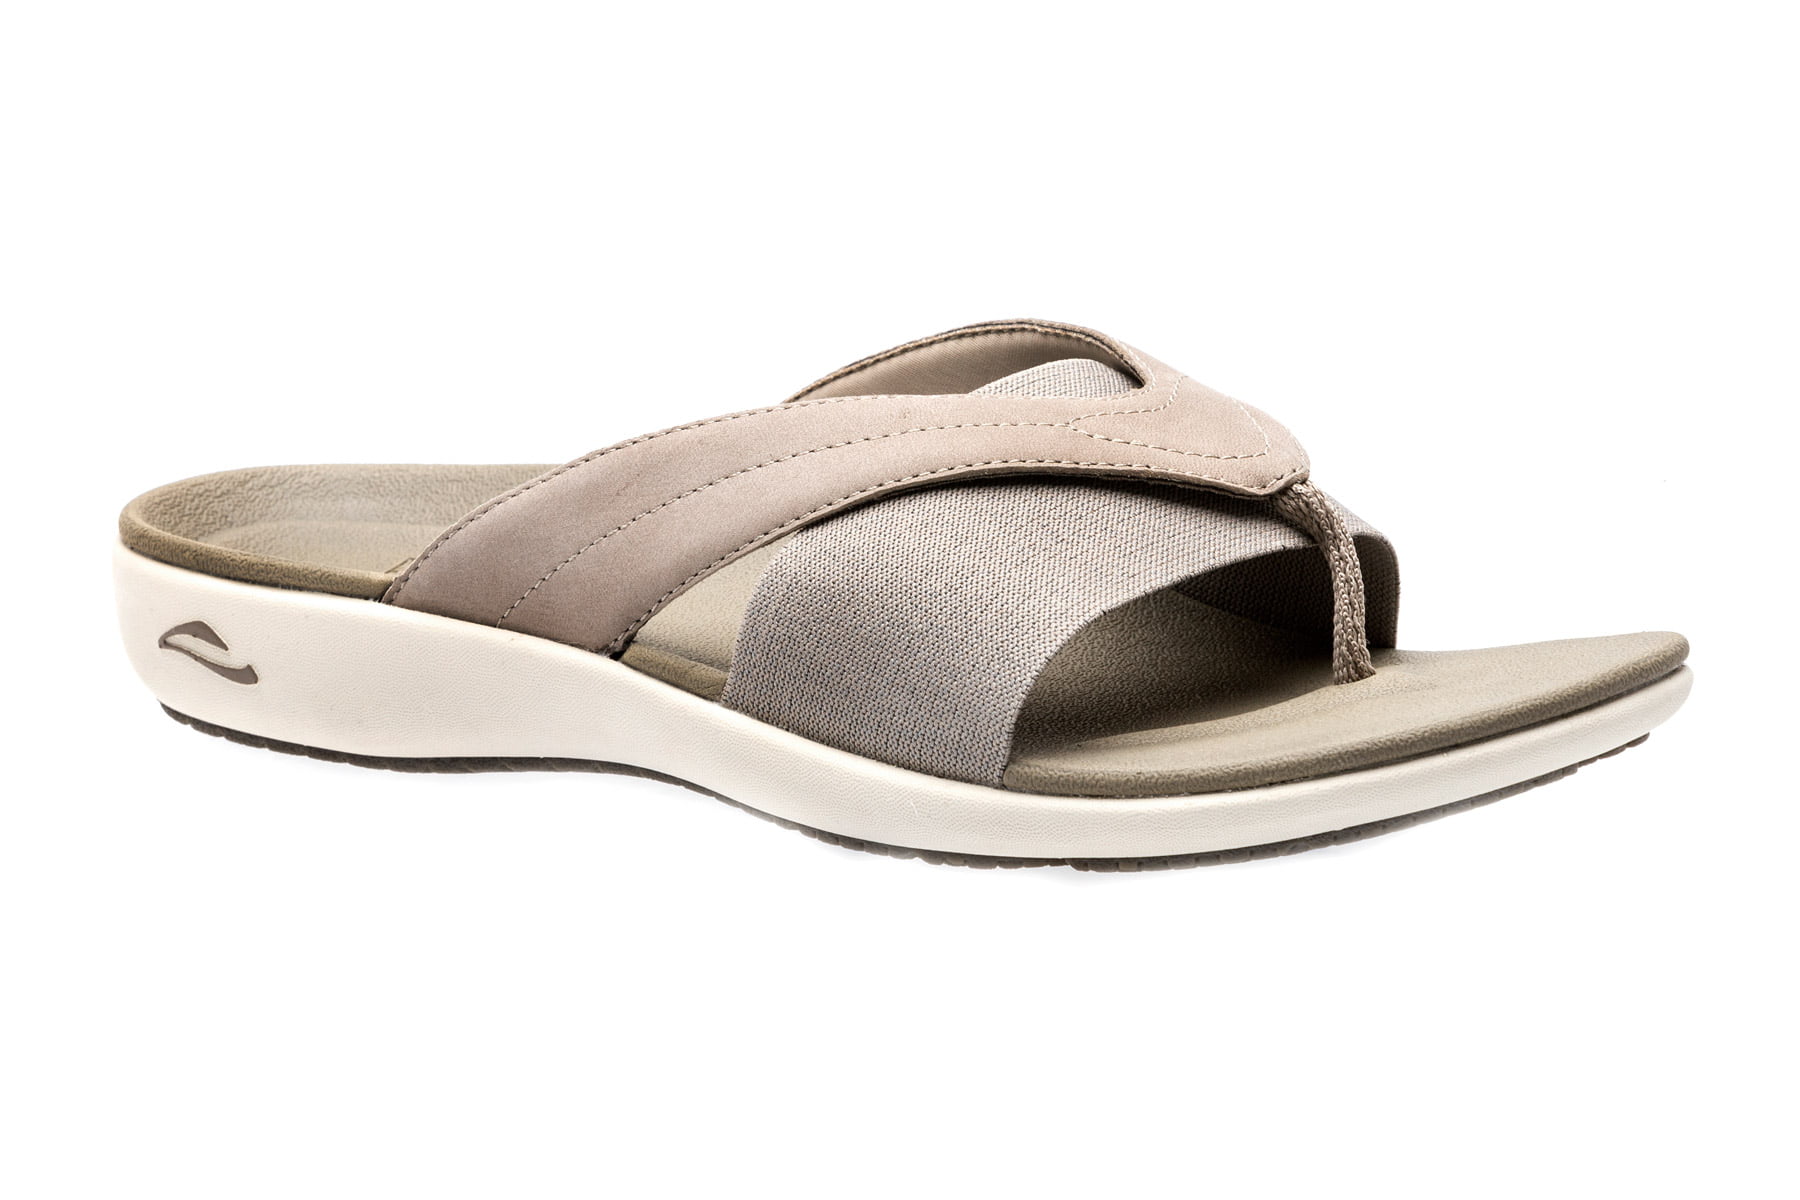 ABEO Footwear - ABEO Kelly Neutral - Flip Flop Sandals in Brown ...